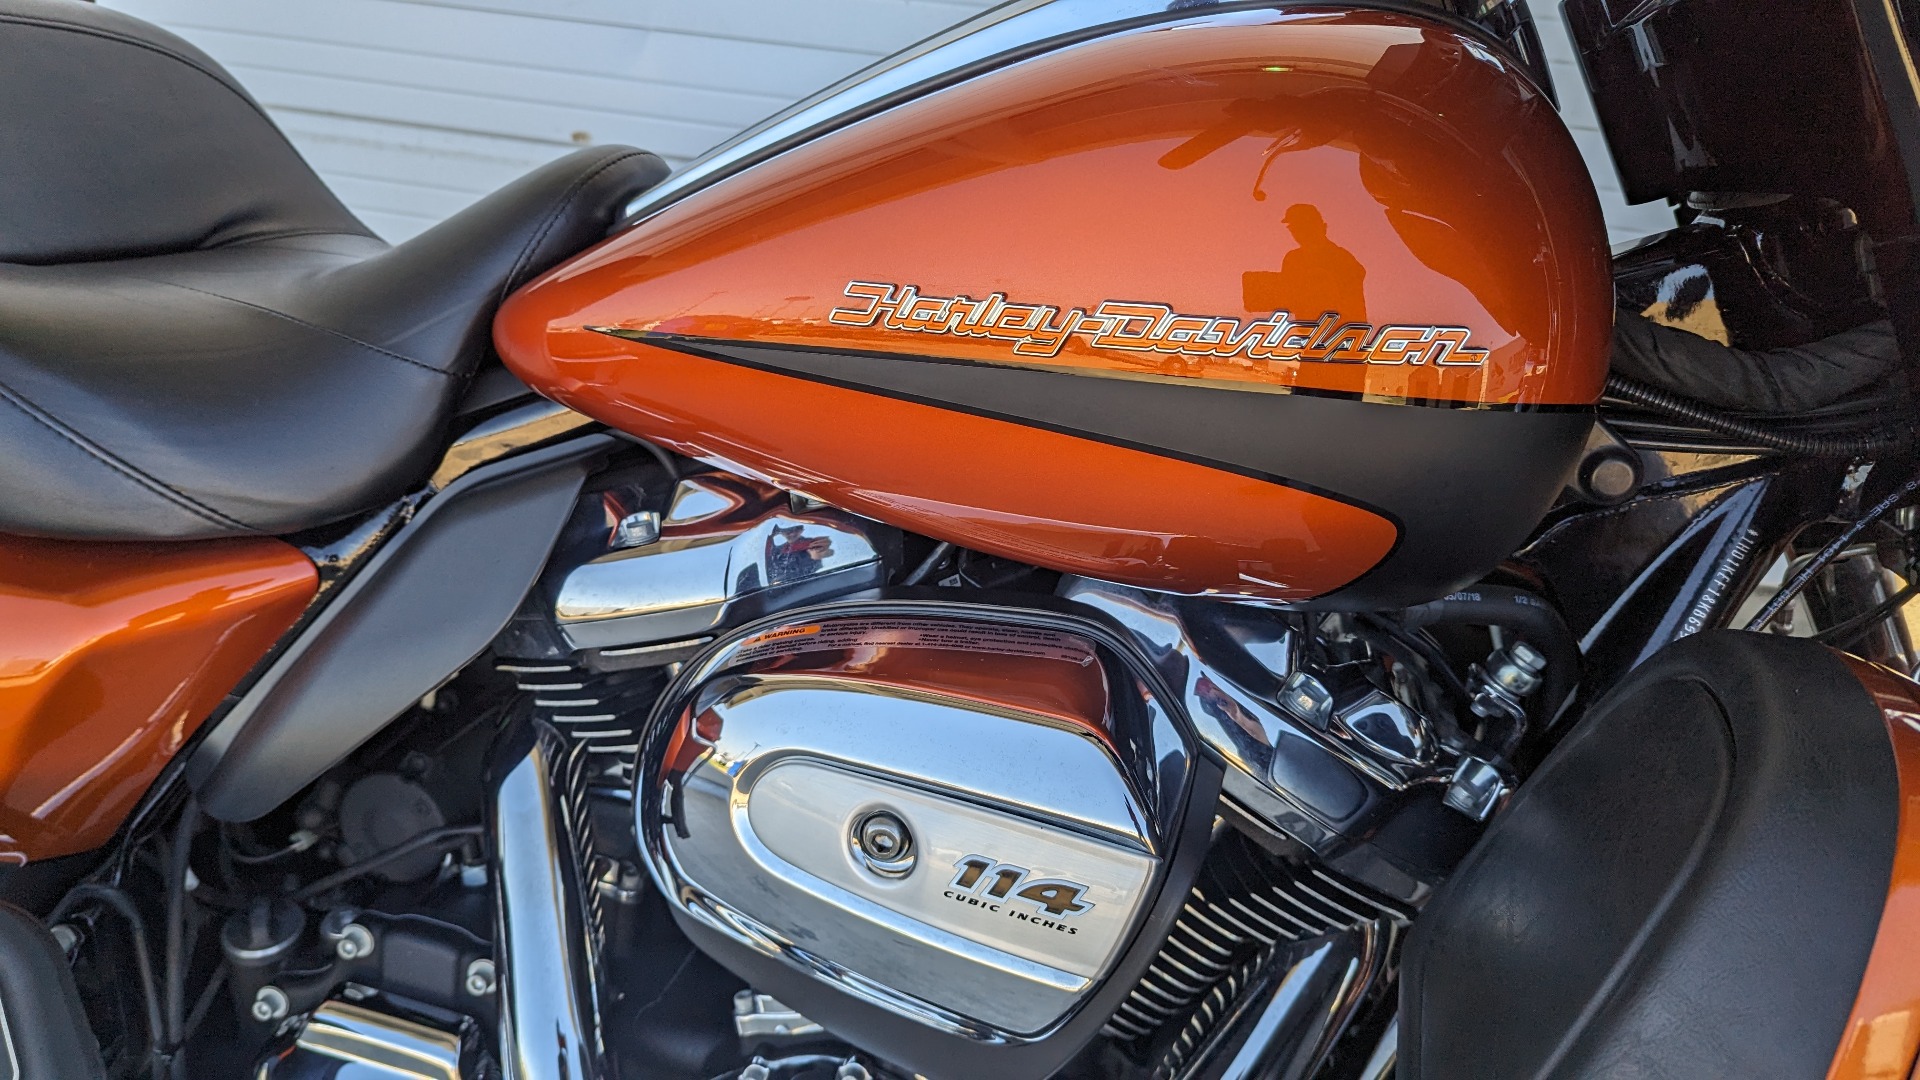 2019 Harley-Davidson Ultra Limited in Monroe, Louisiana - Photo 13